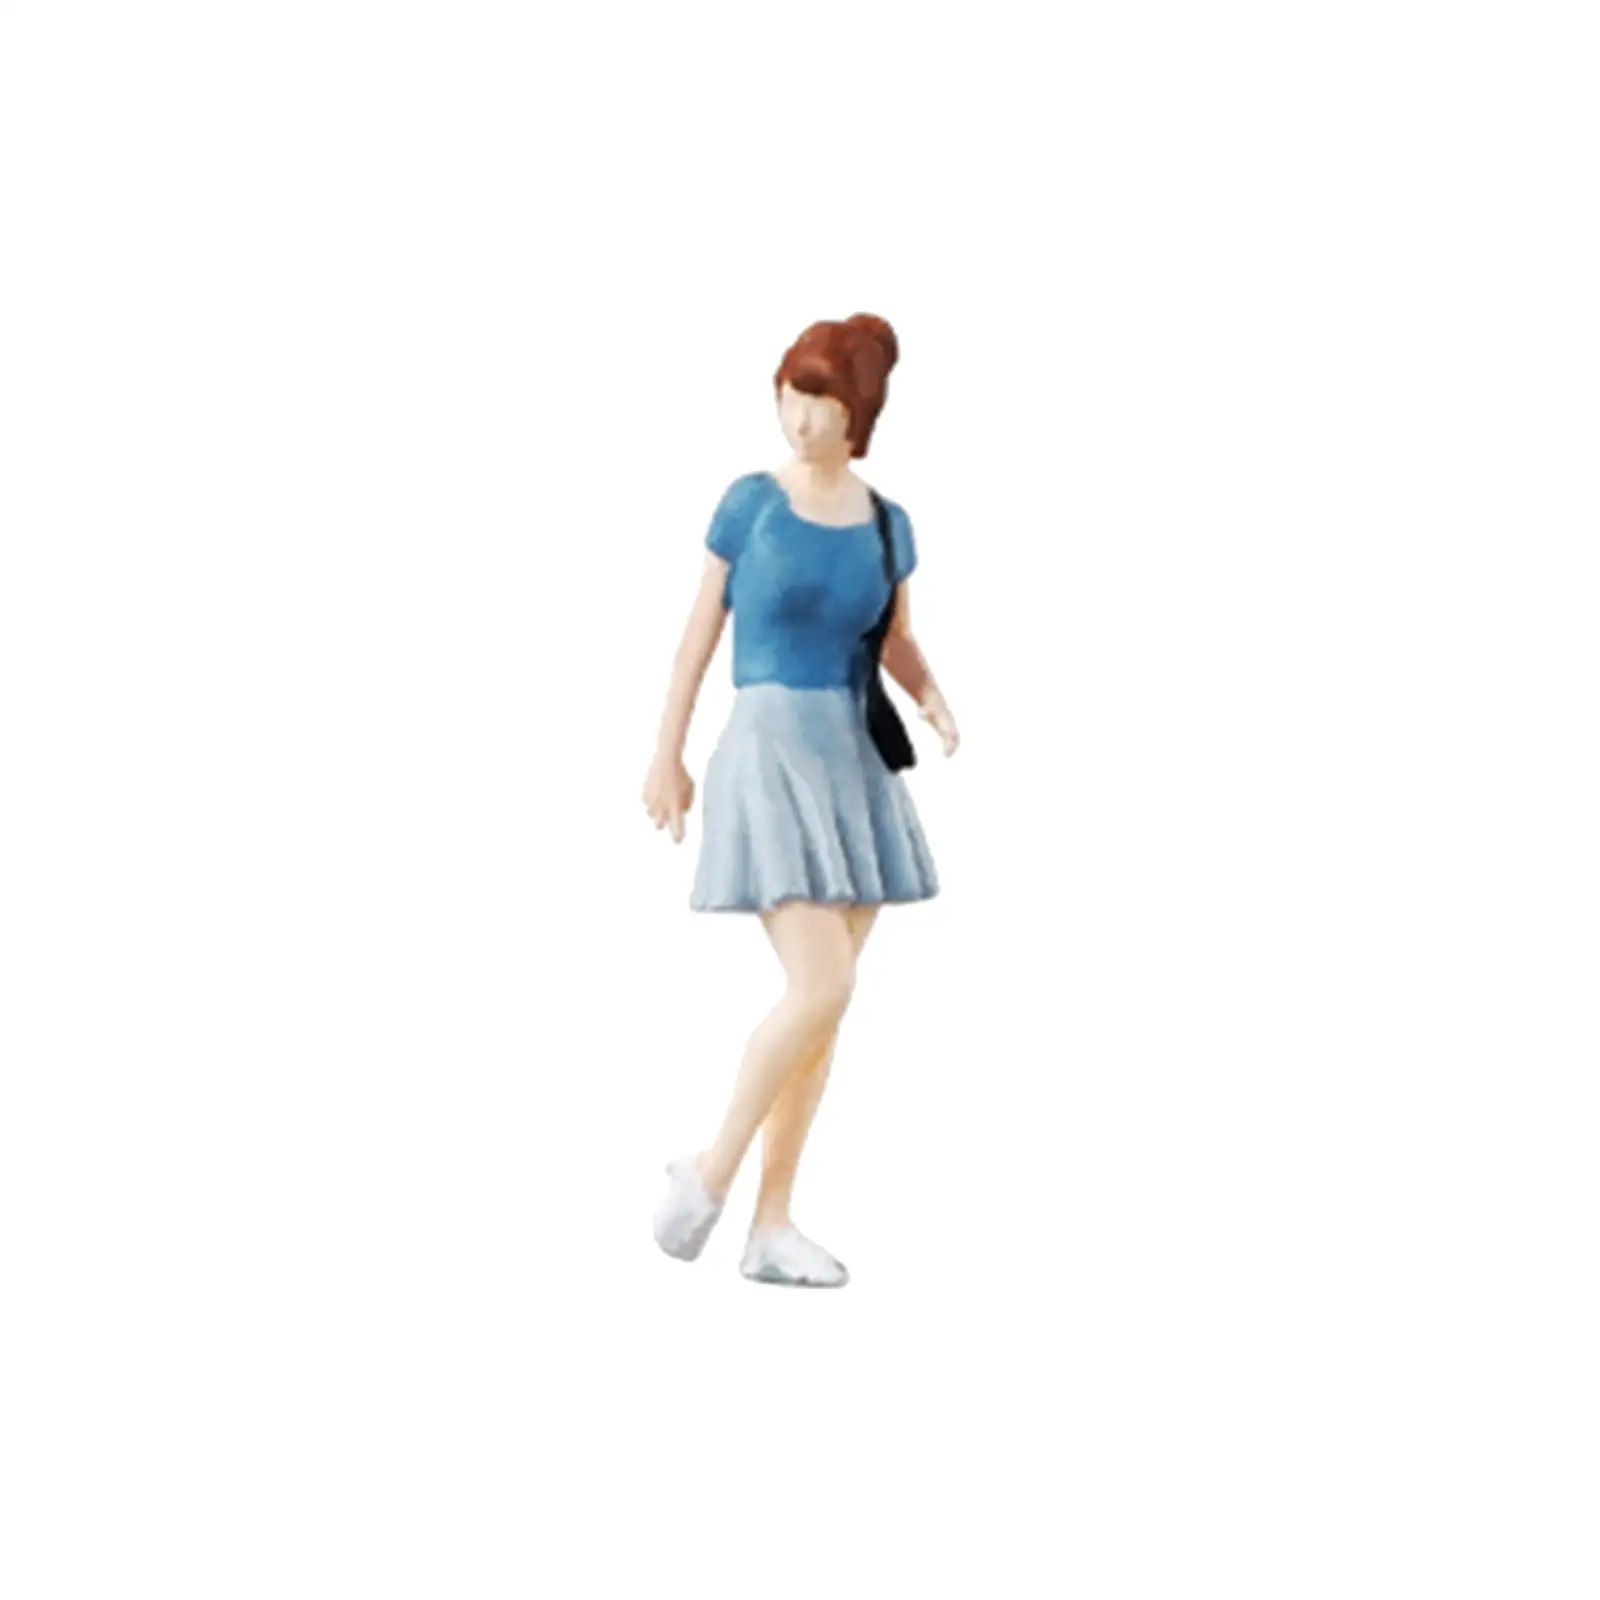 1/64 Scale Miniature Figure Blue Skirt Girl Mini Model Building Kits Doll Toy for DIY Projects Desktop Ornament Fariy Garden